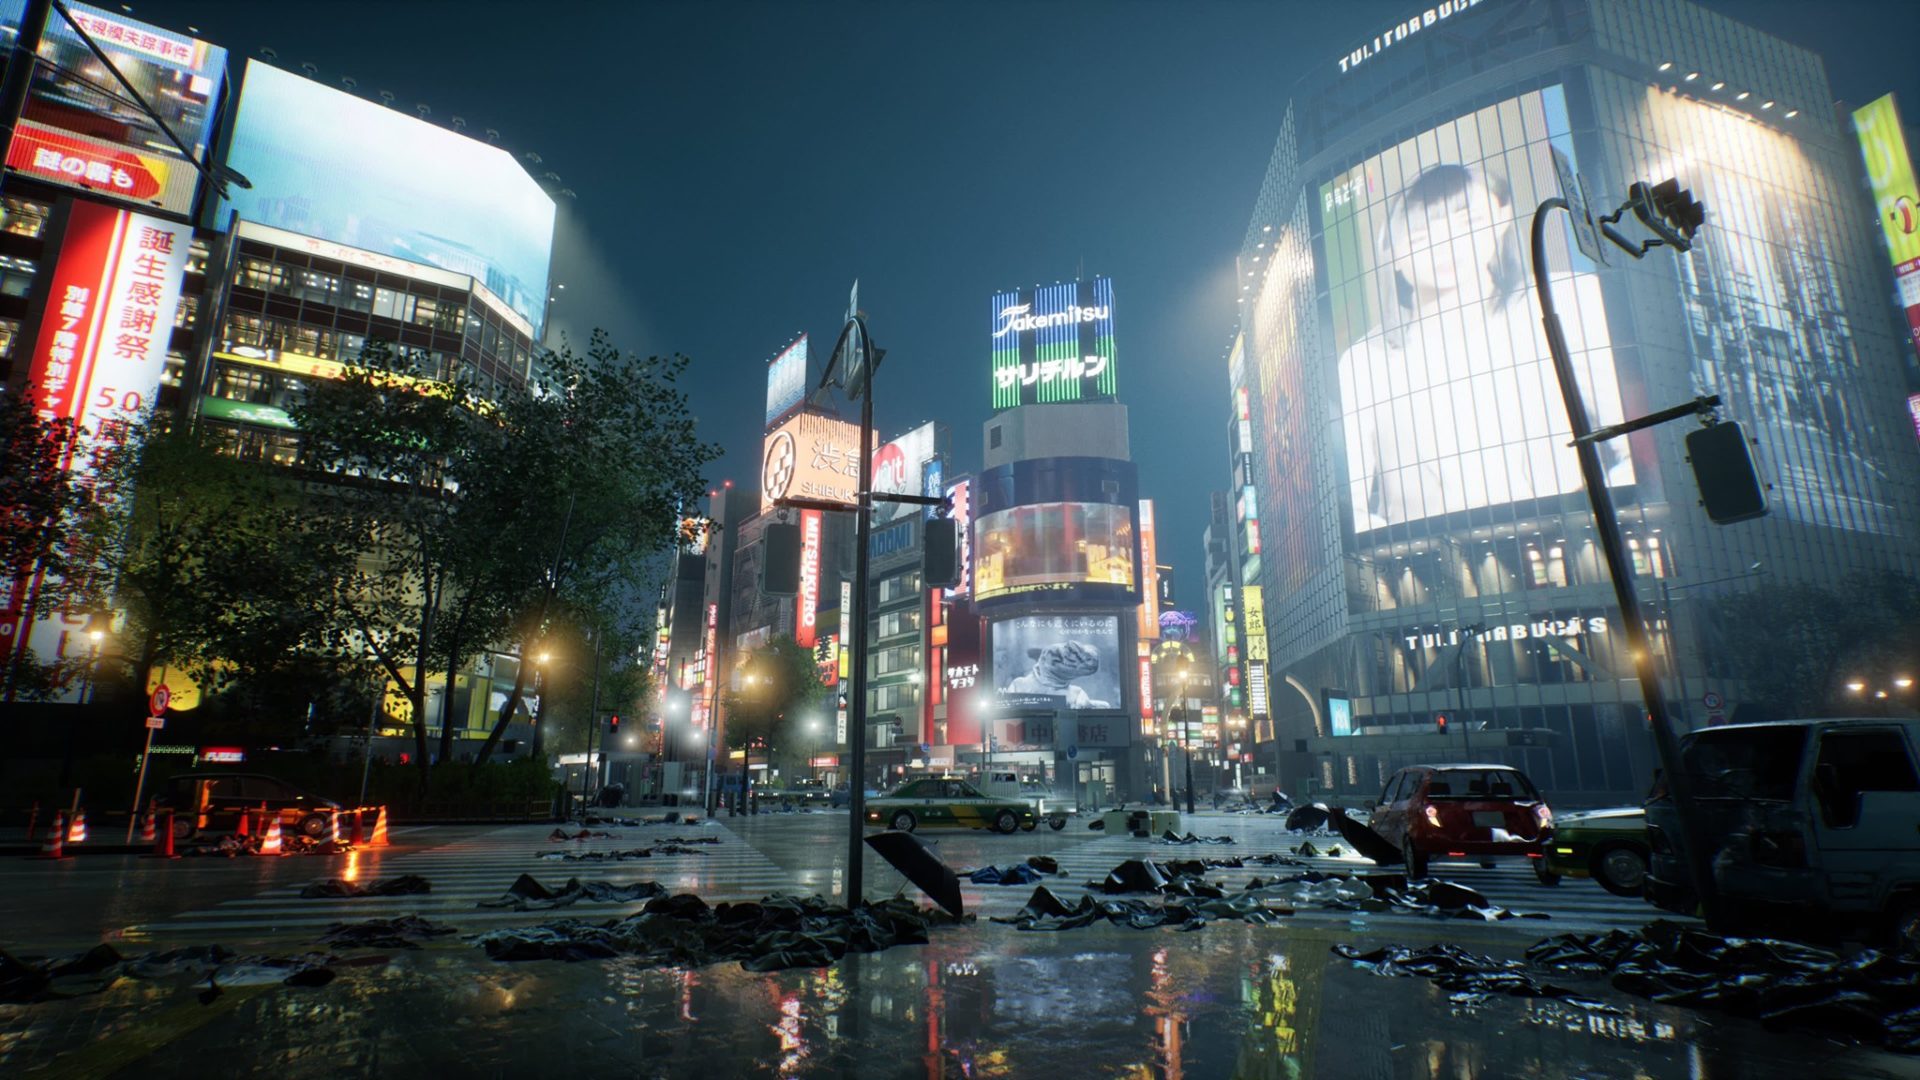 Ghostwire Tokyo ไม่ใช่เกมแนวโลกกว้าง เพียงแค่แผนที่ภายในเกมมีขนาดใหญ่เท่านั้น